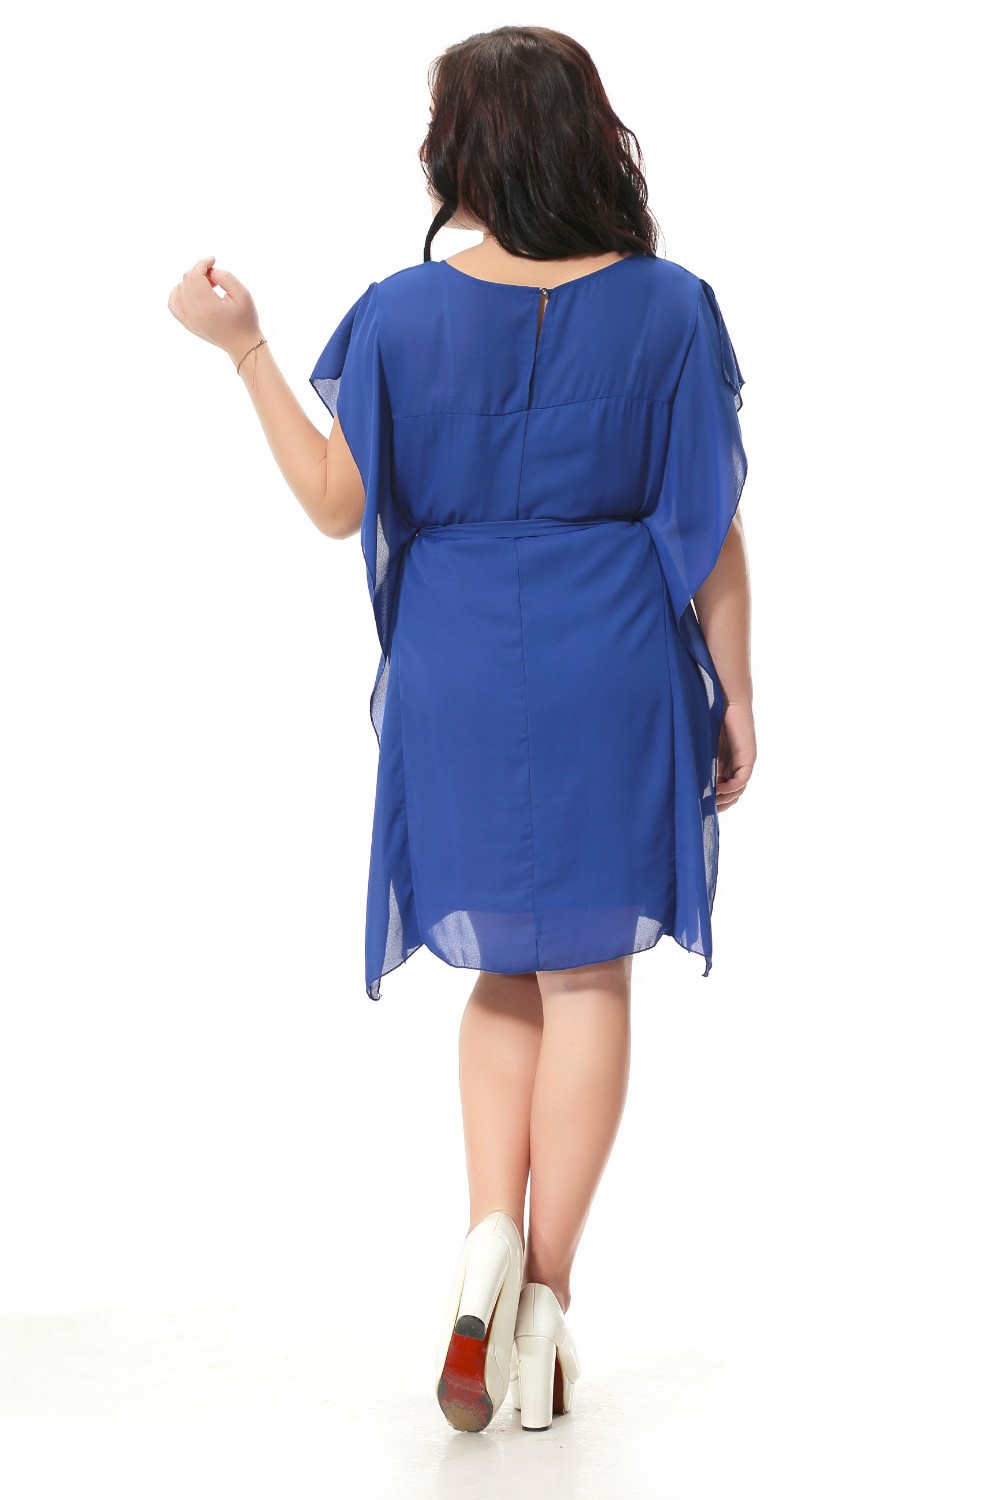 Plus-size-casual-dress-with-sashes-decoration-Sexy-asymmetrical-chiffon-dress-women-Blue-party-dress-32698357951